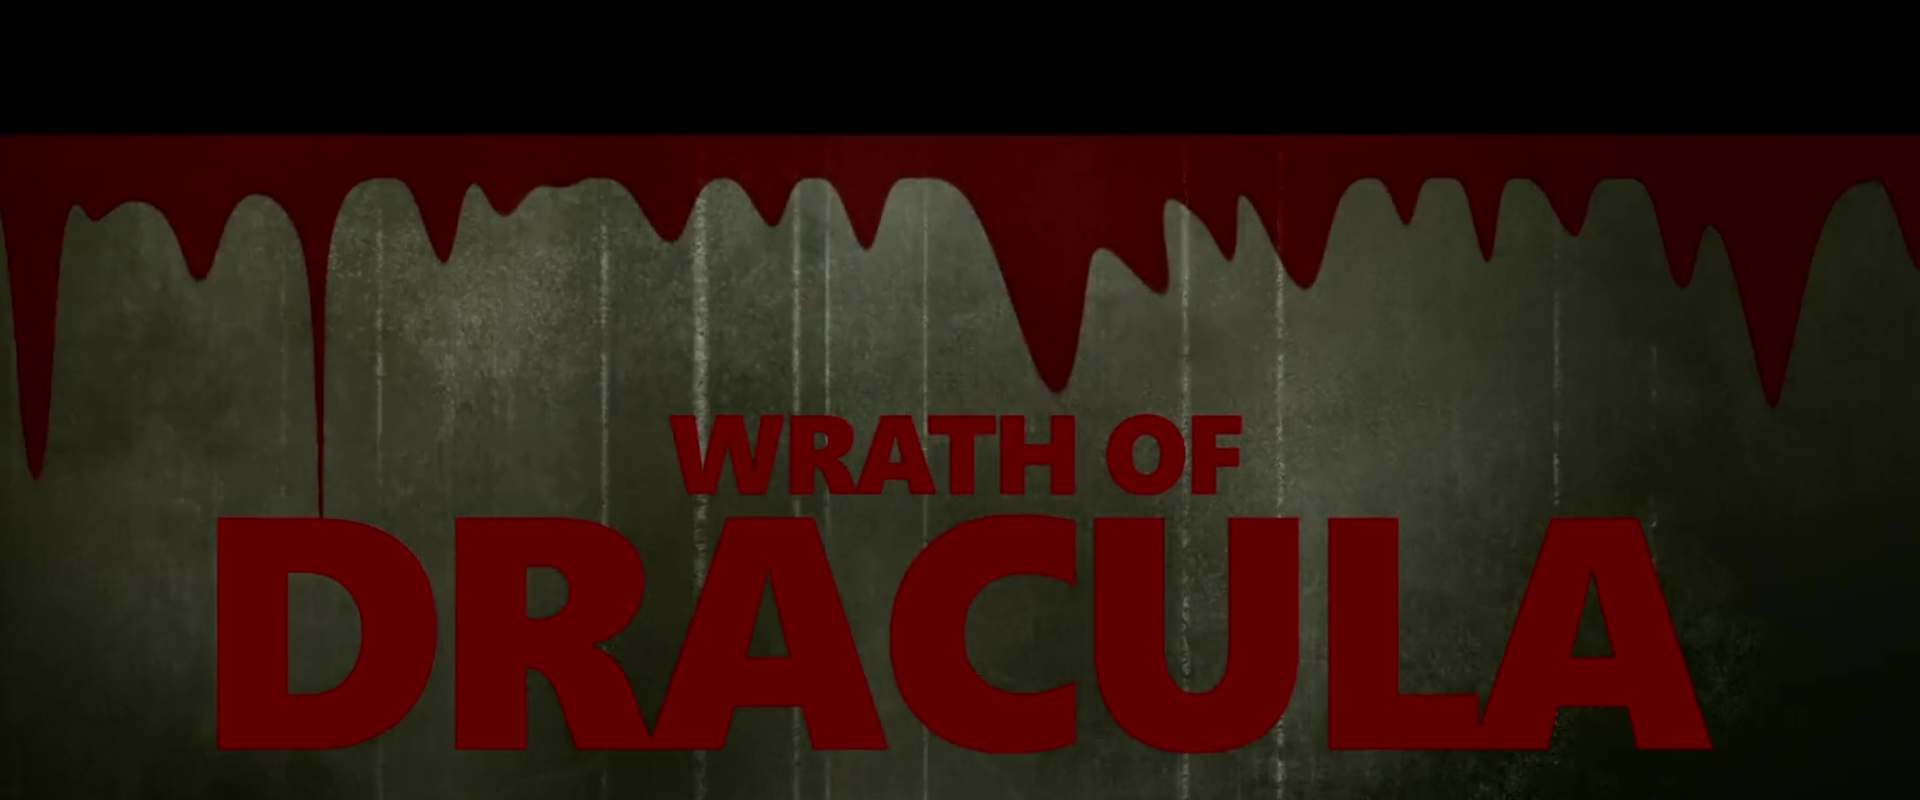 Wrath of Dracula background 2